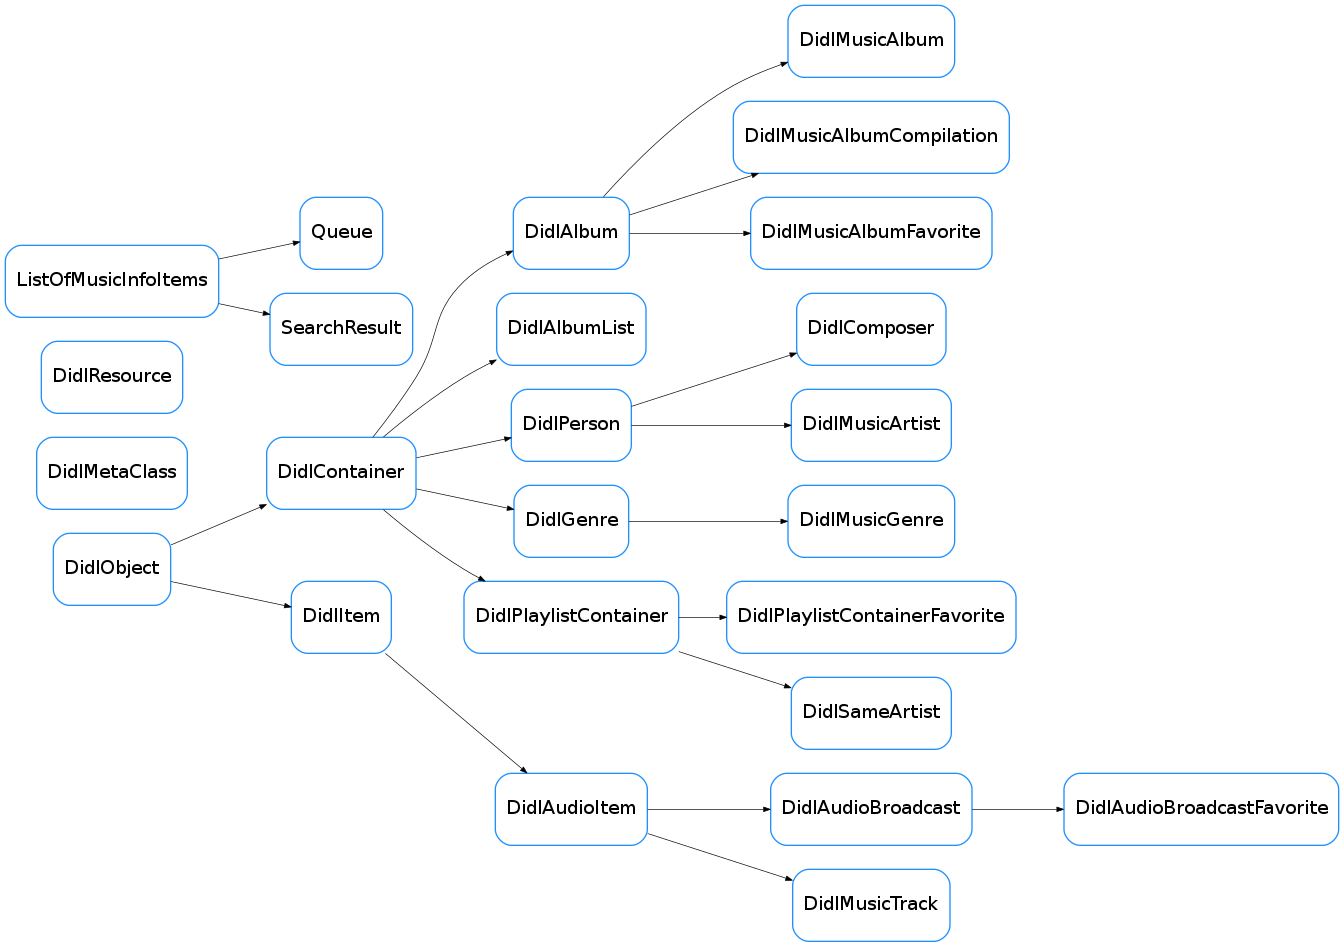 Inheritance diagram of soco.data_structures